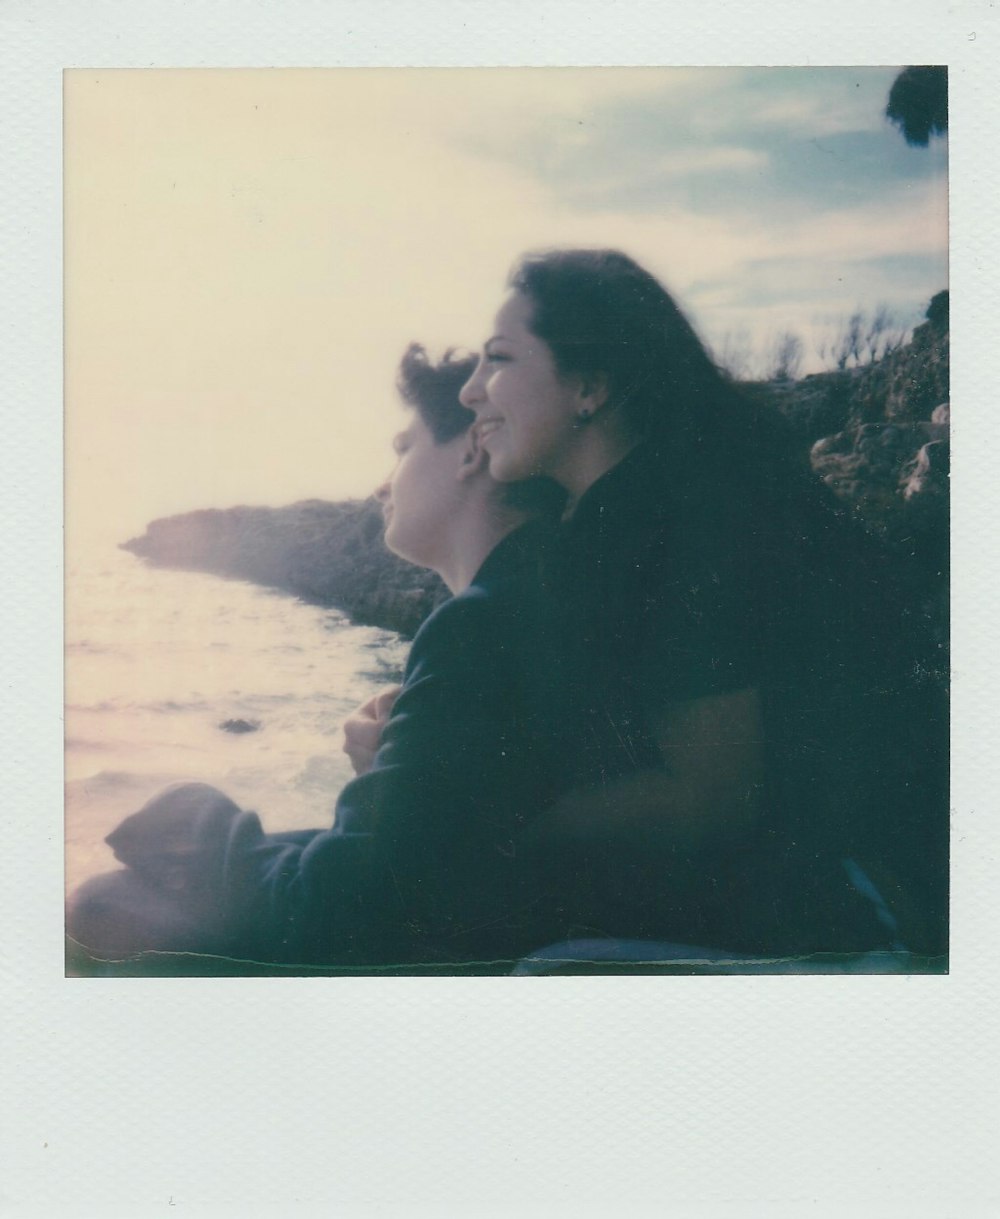 Mann und Frau küssen sich tagsüber am Strandufer